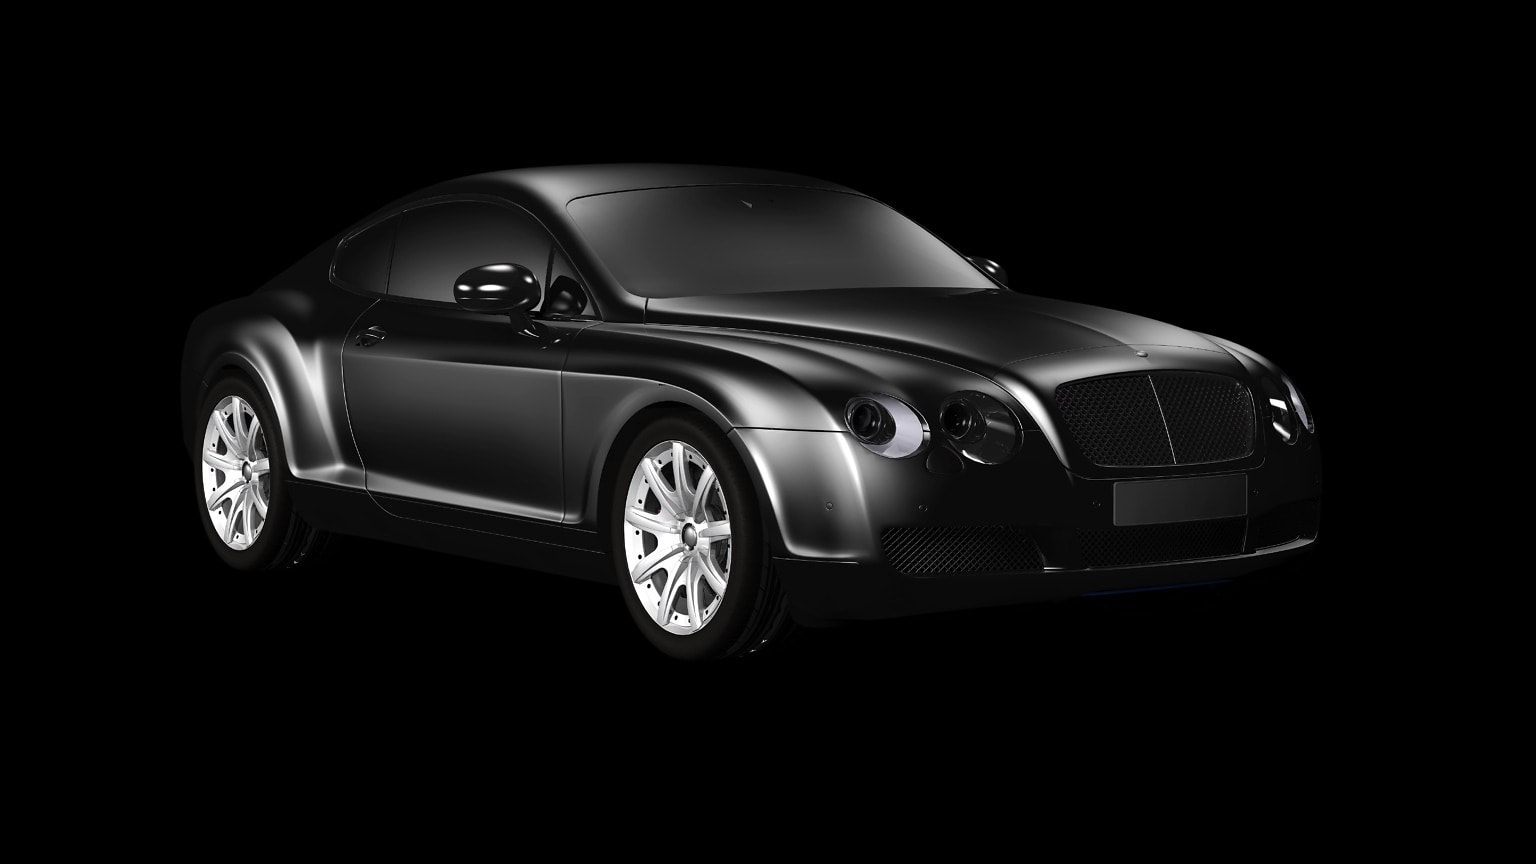 Free picture: black car, monochrome, vehicle, automotive, wheel, modern ...